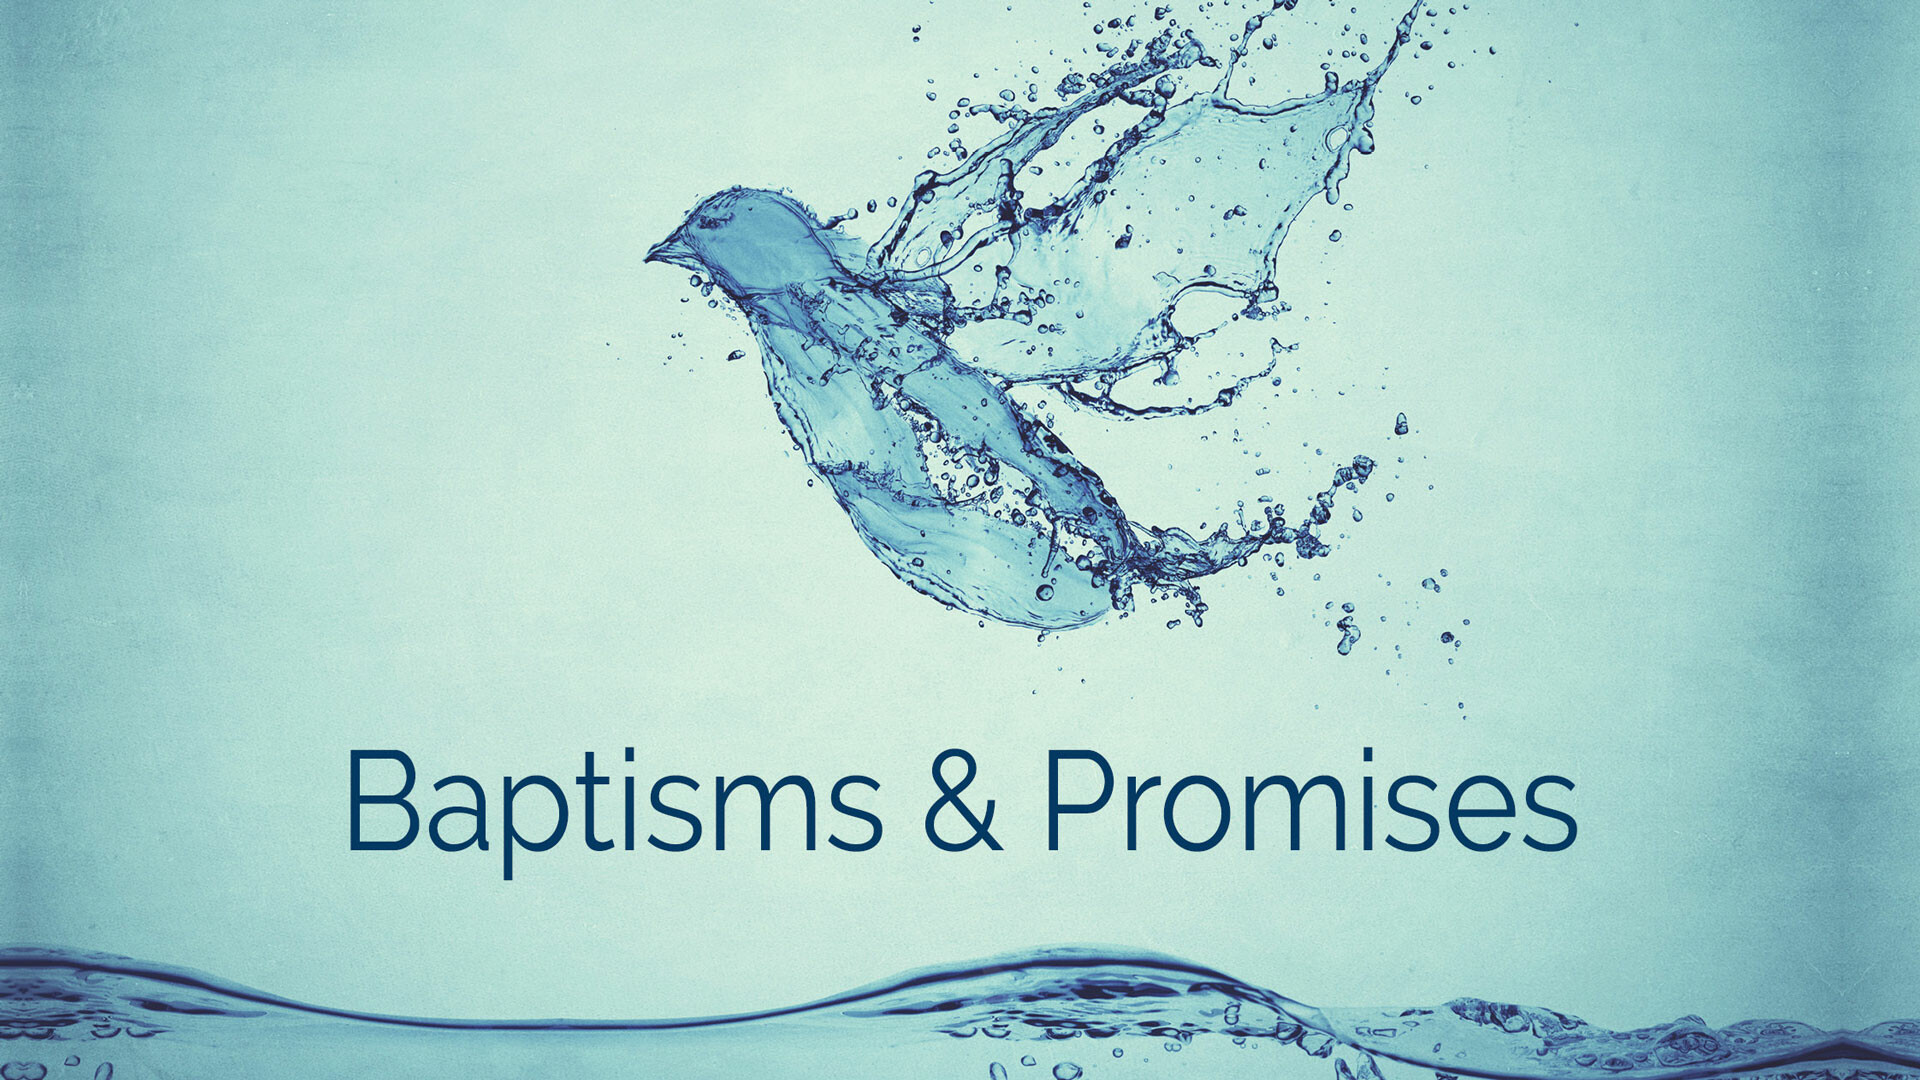 Baptism & Promises